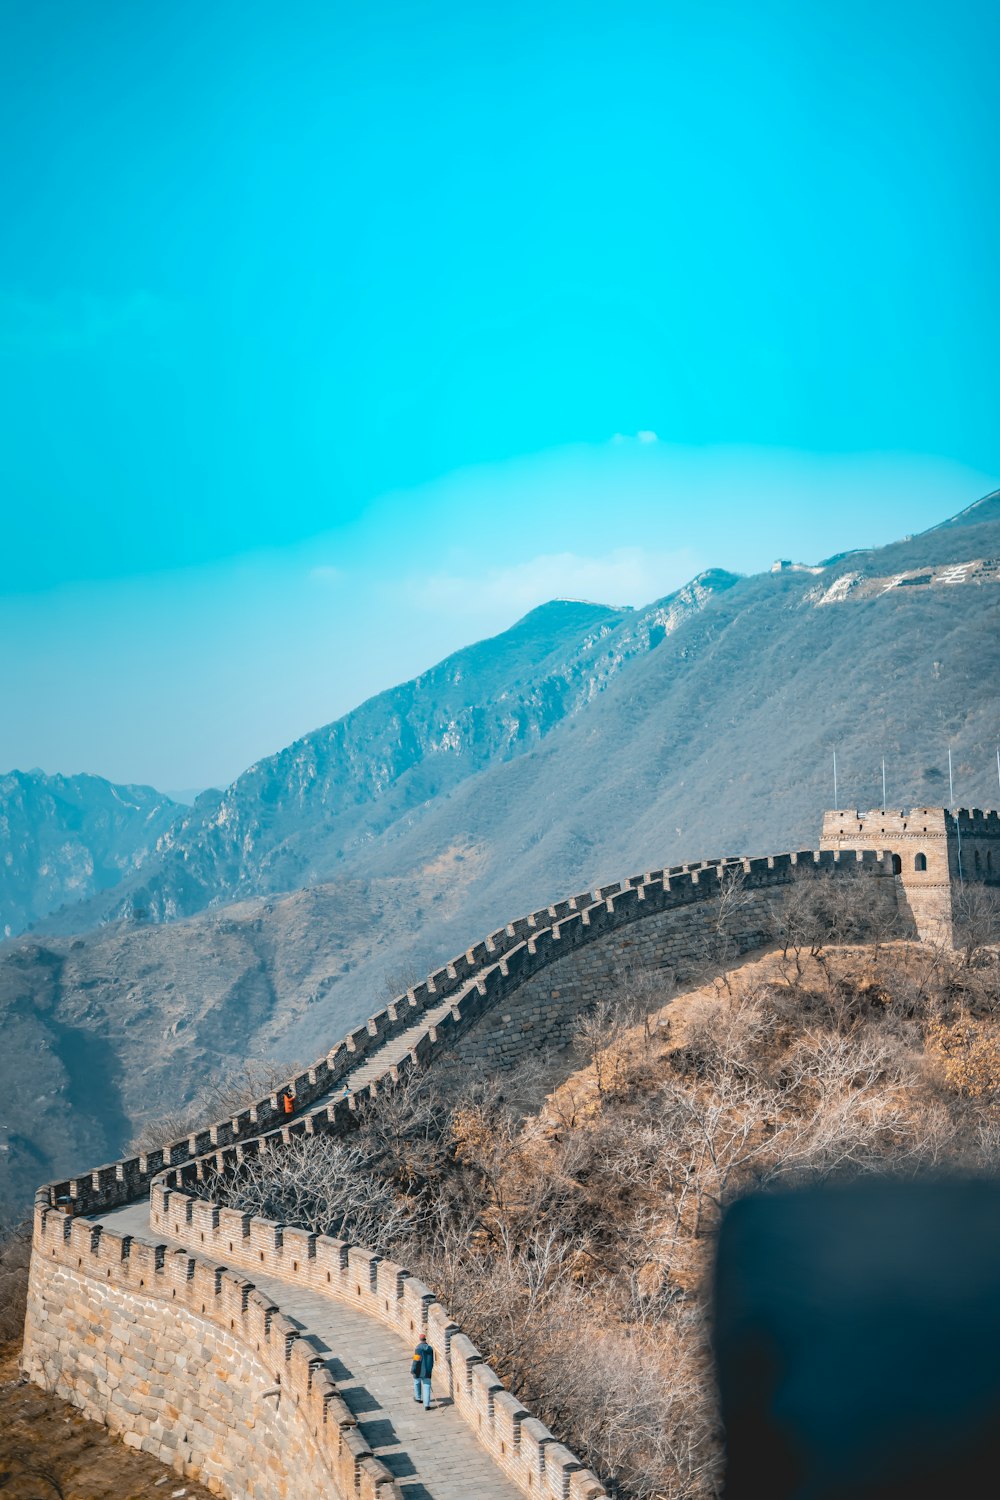 Wall of China aerial view